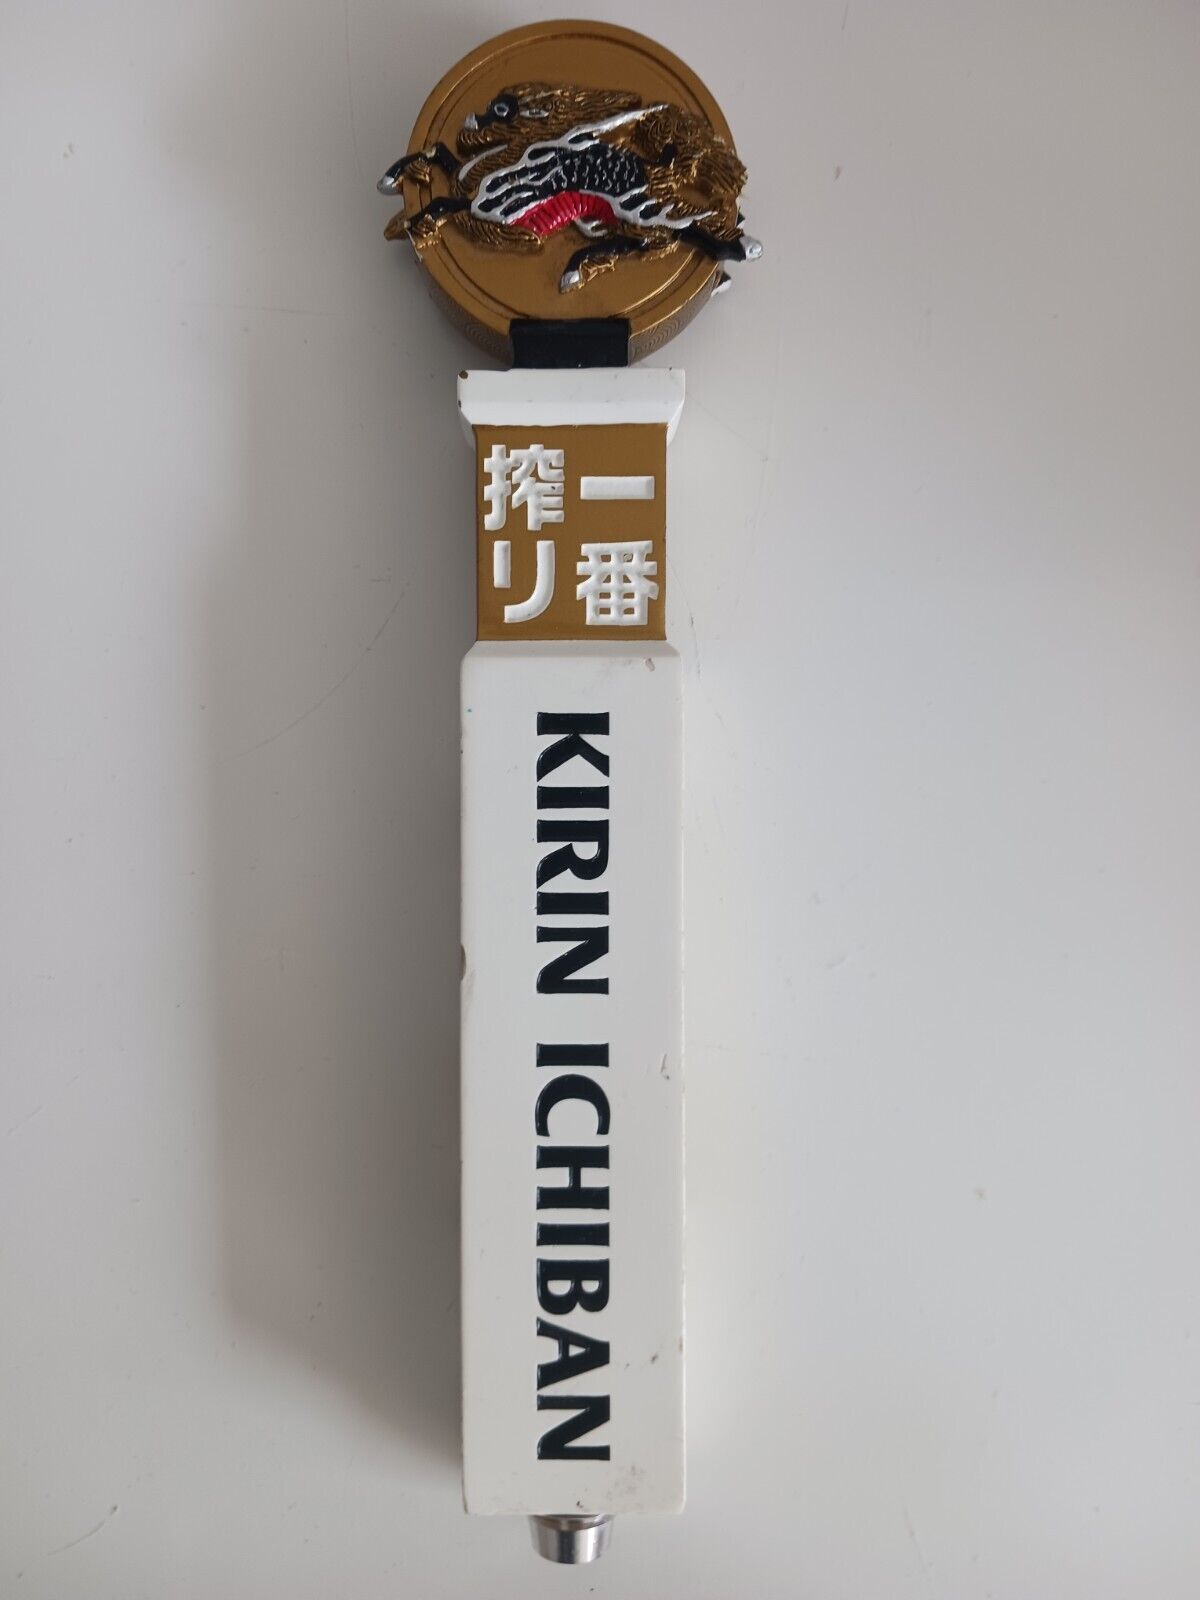 Kirin Ichiban Lager Dragon Japan Beer Tap Handle 12” Super Rare Used Some Chips